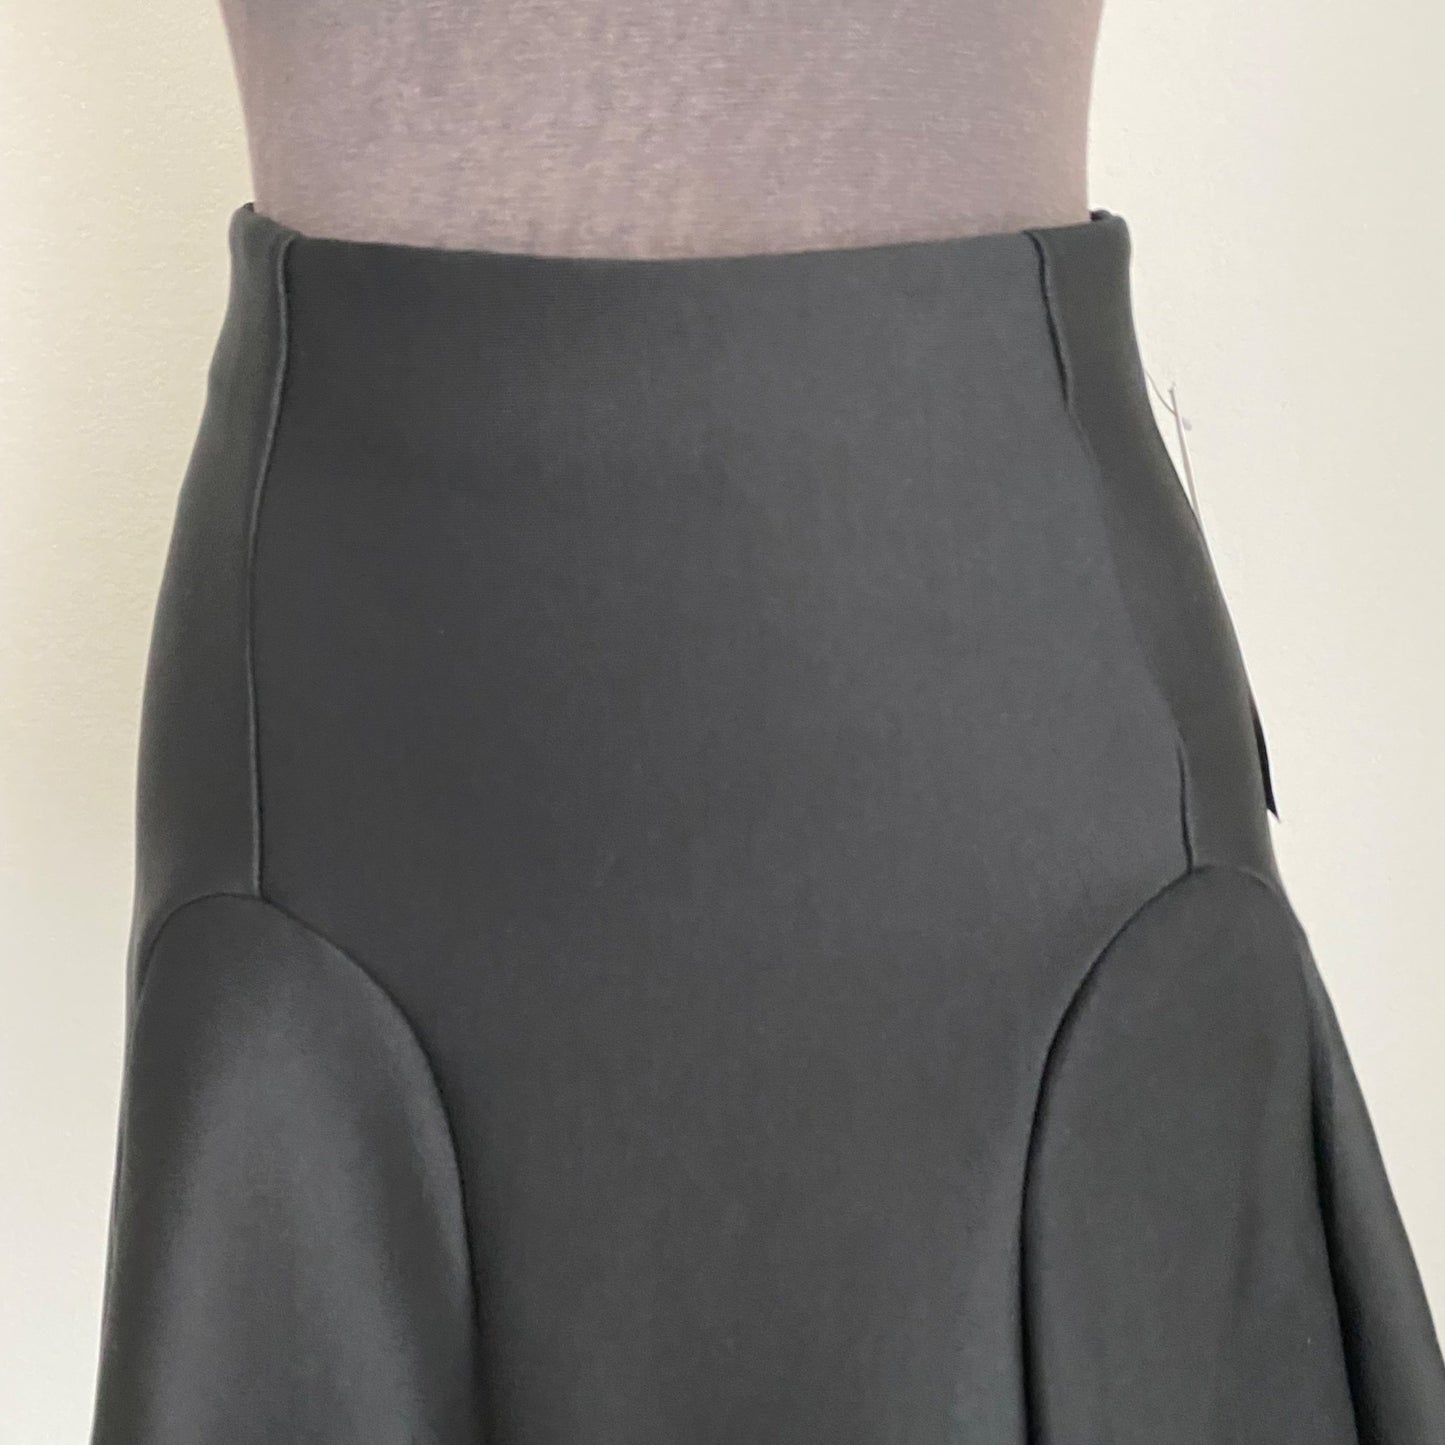 Mossimo sz XS high rise waisted Flare mini skirt